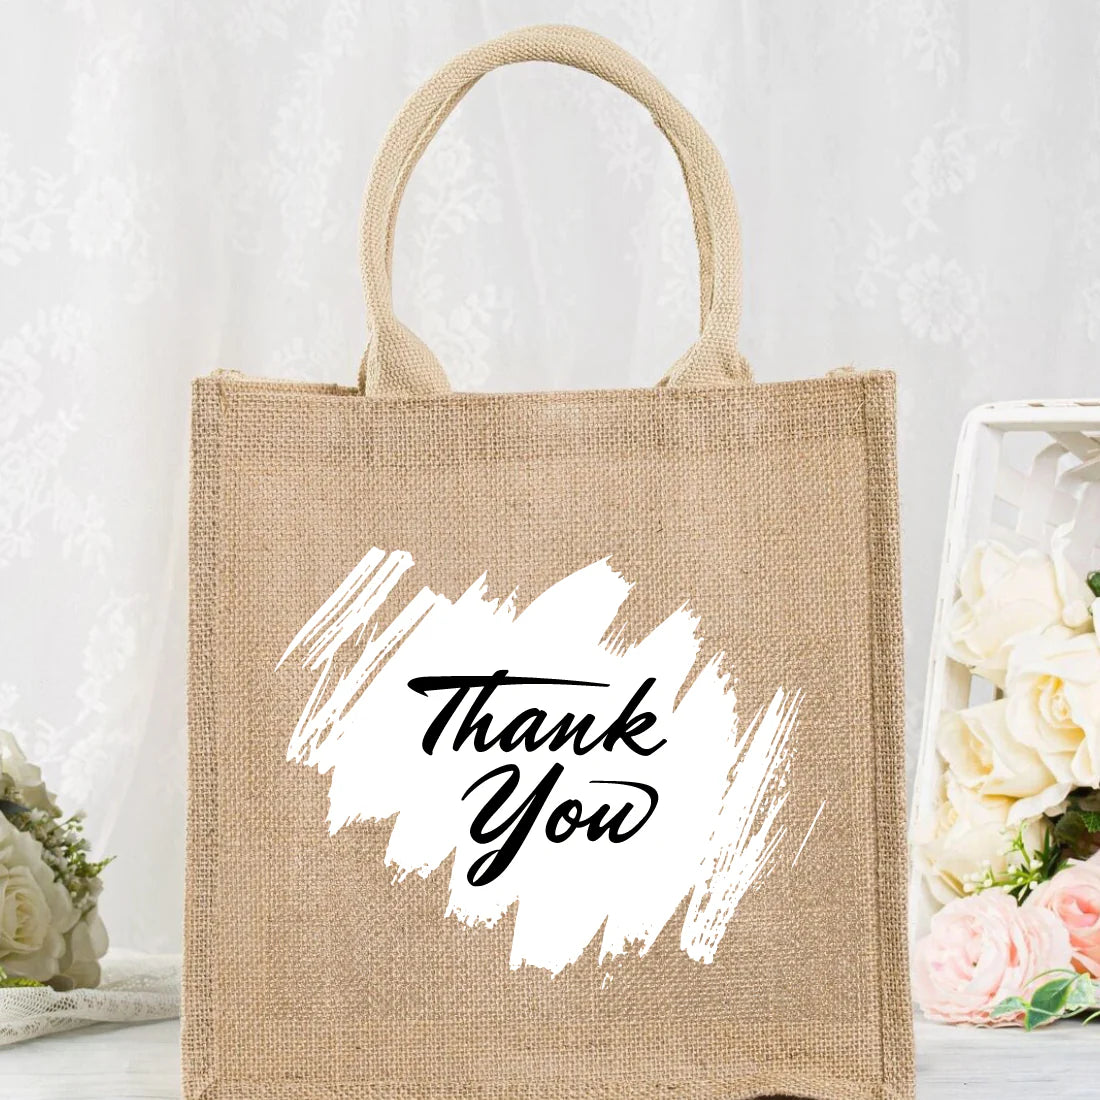 "Mangaluru's Eco-Friendly Essential: Jute Hessian Medium Shopping Bags"